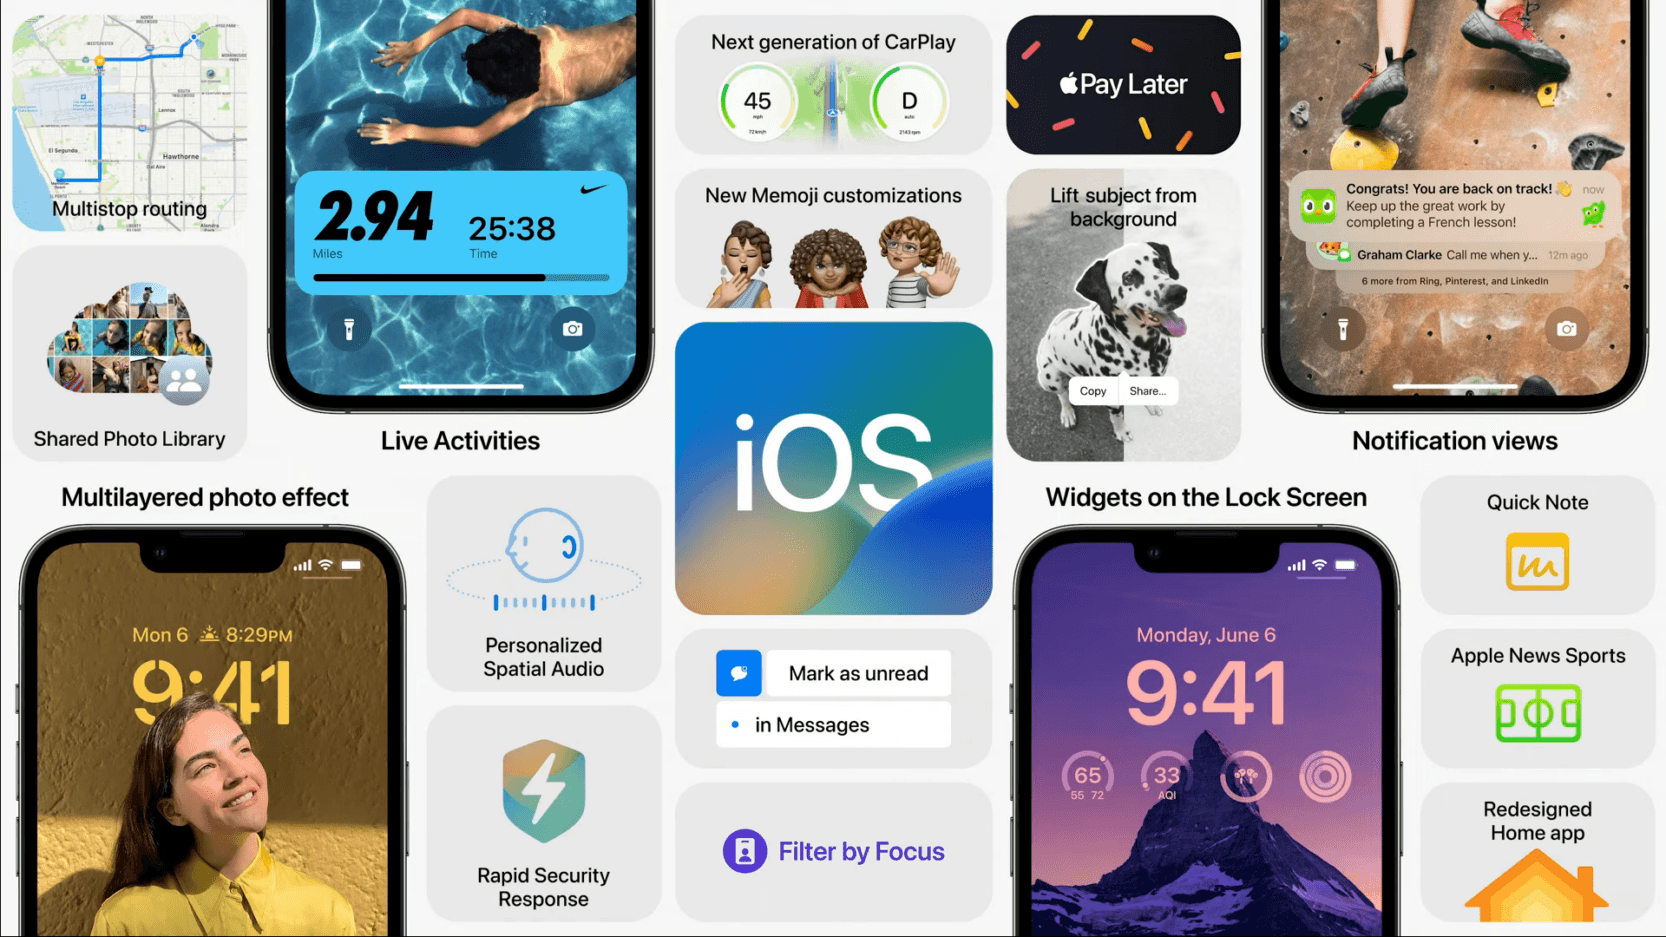 تحديث iOS 16